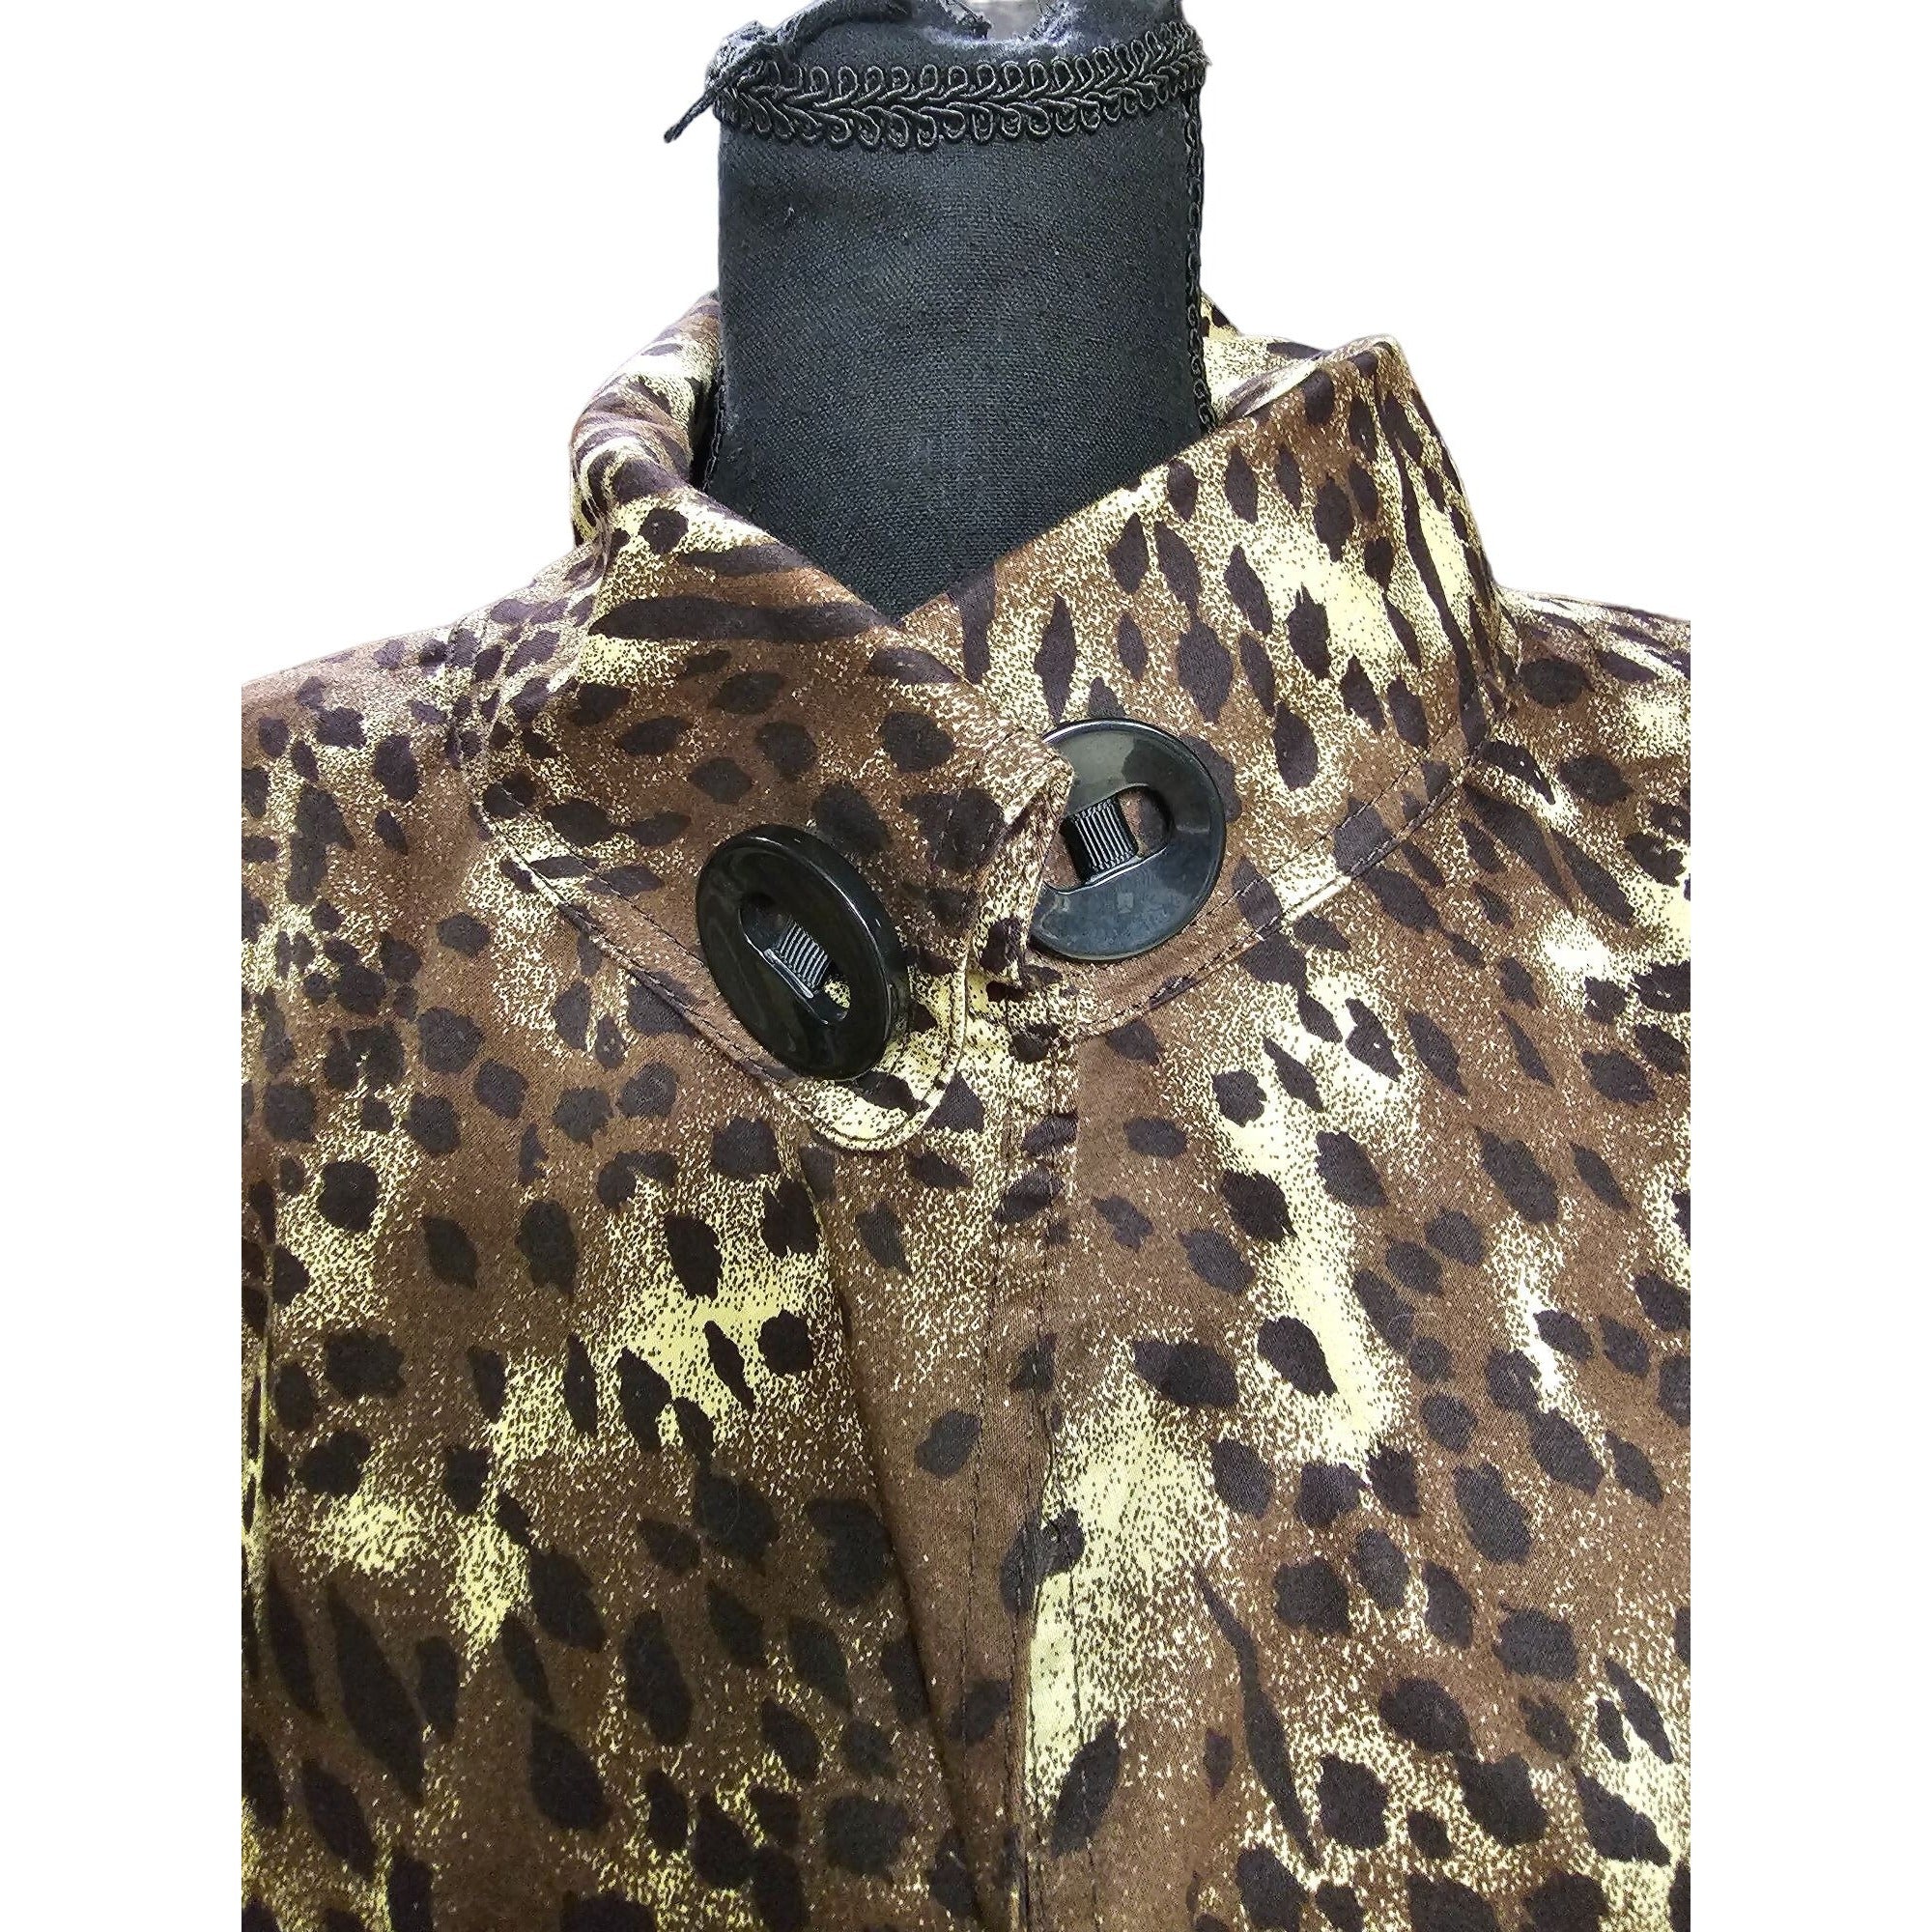 Grace Elements Leopard Print, Cropped Stylish Jacket, Size 10